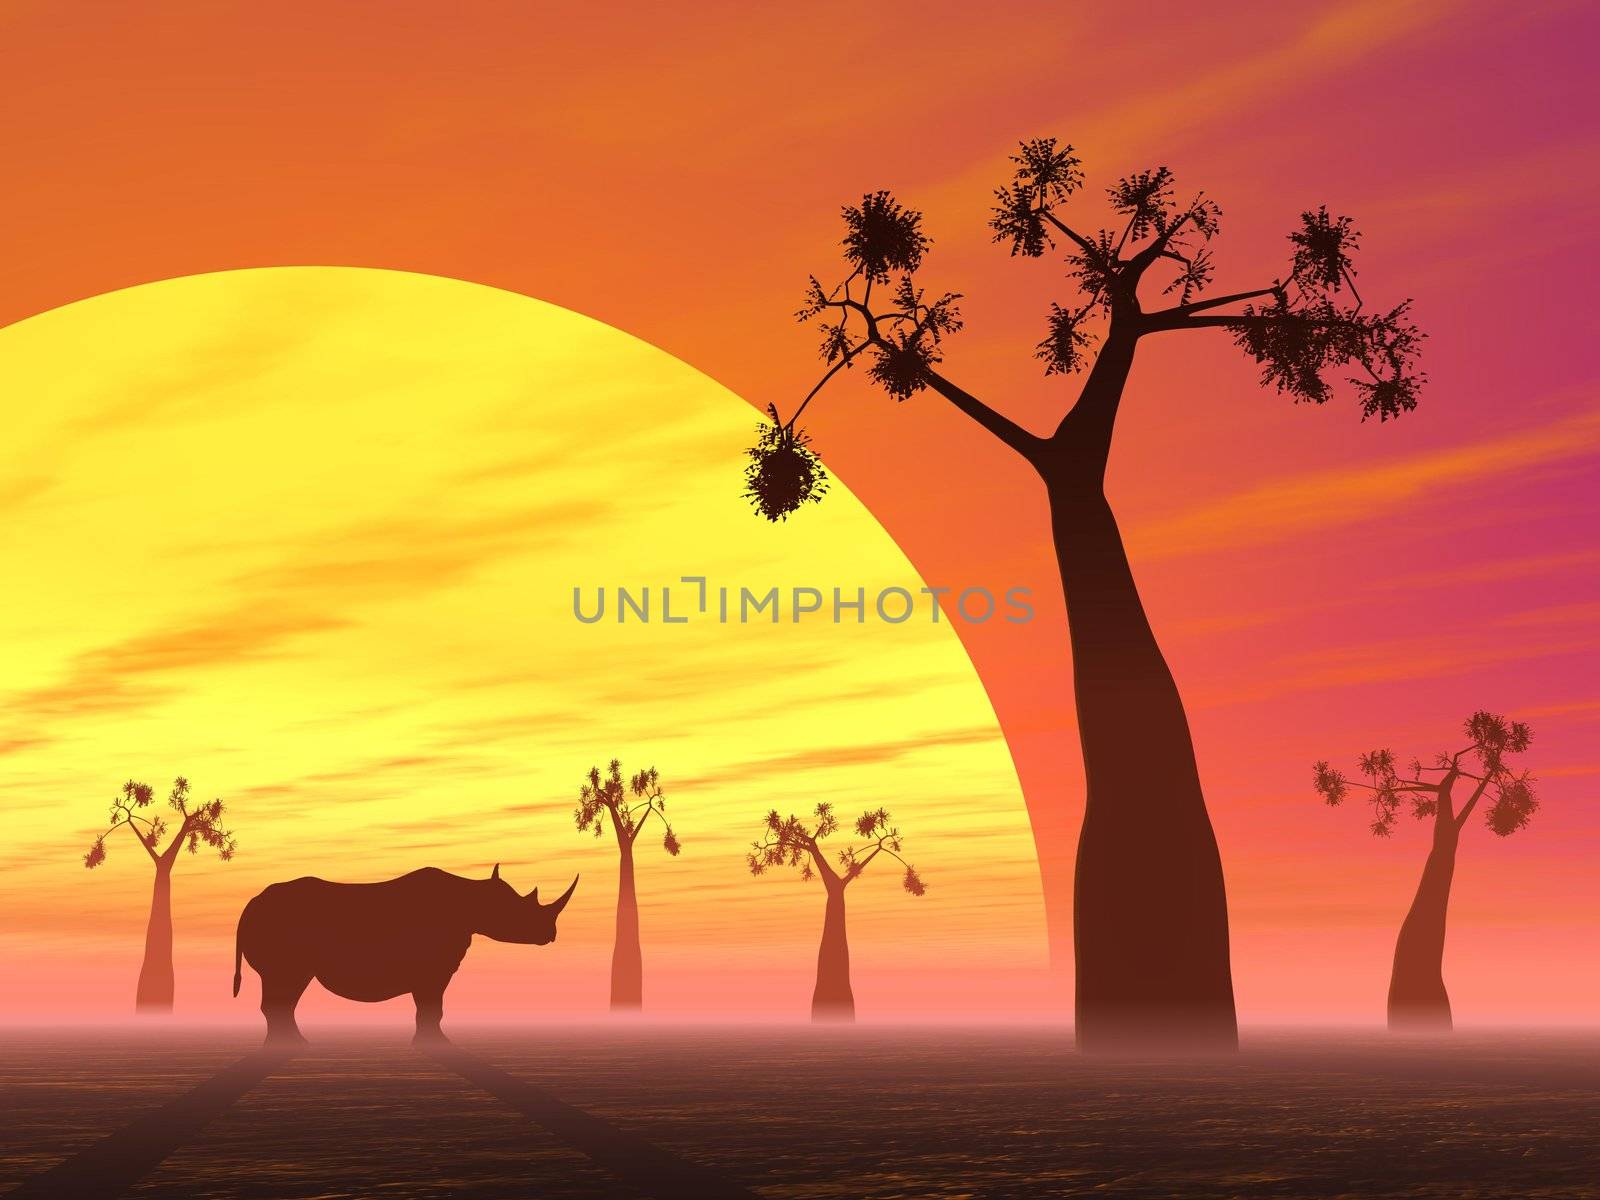 Rhinoceros in the savannah by Elenaphotos21